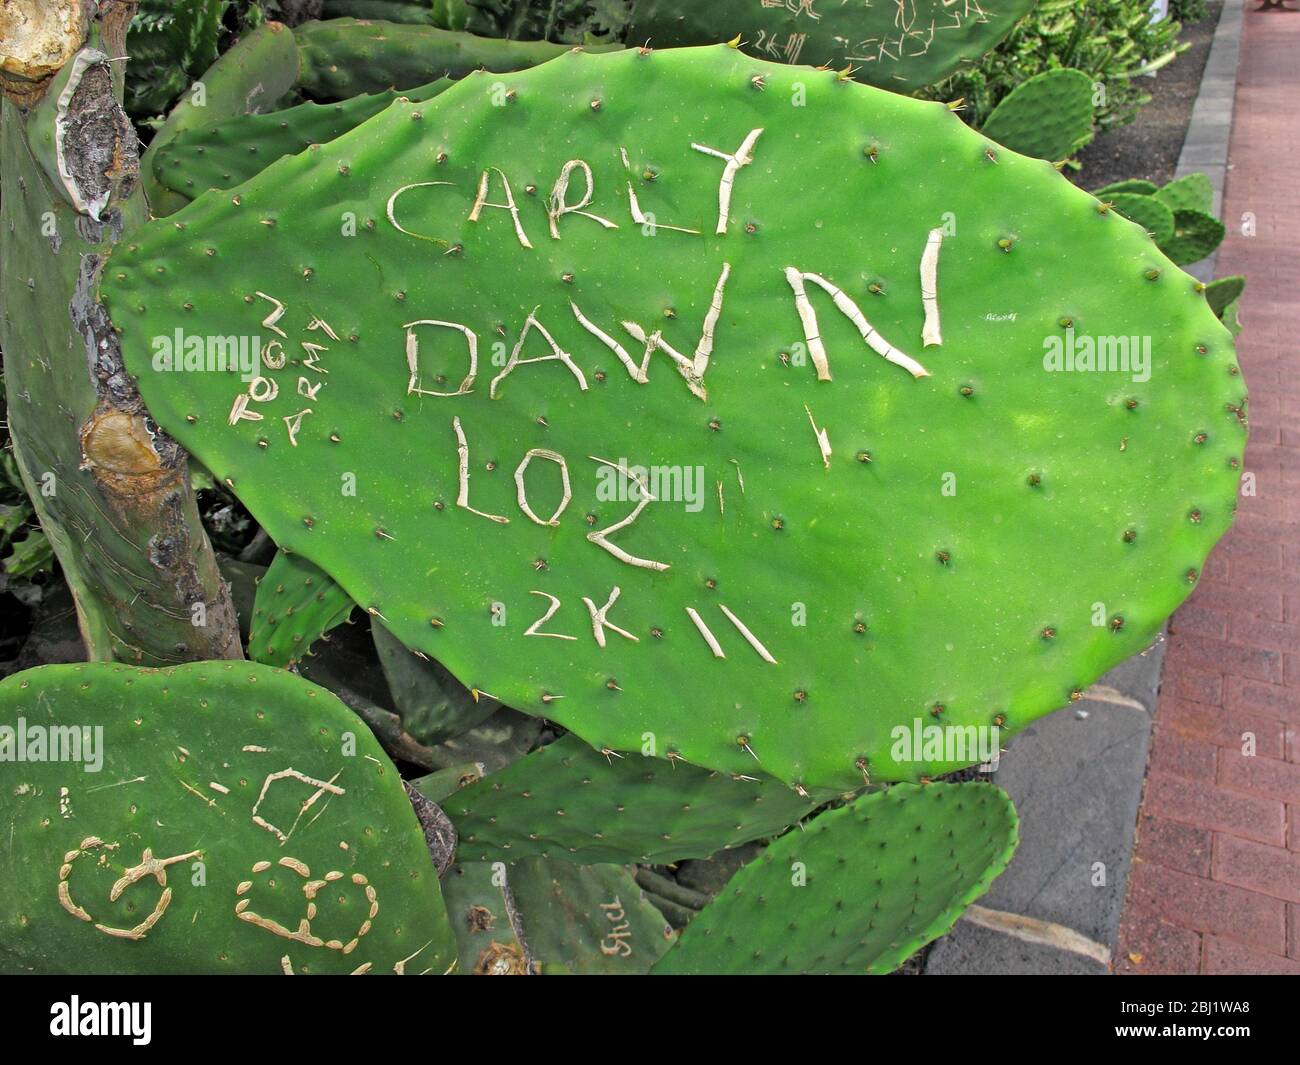 Carly Dawn,Toon Army,Loz,2k11,carved,on cactus,graffiti Stock Photo